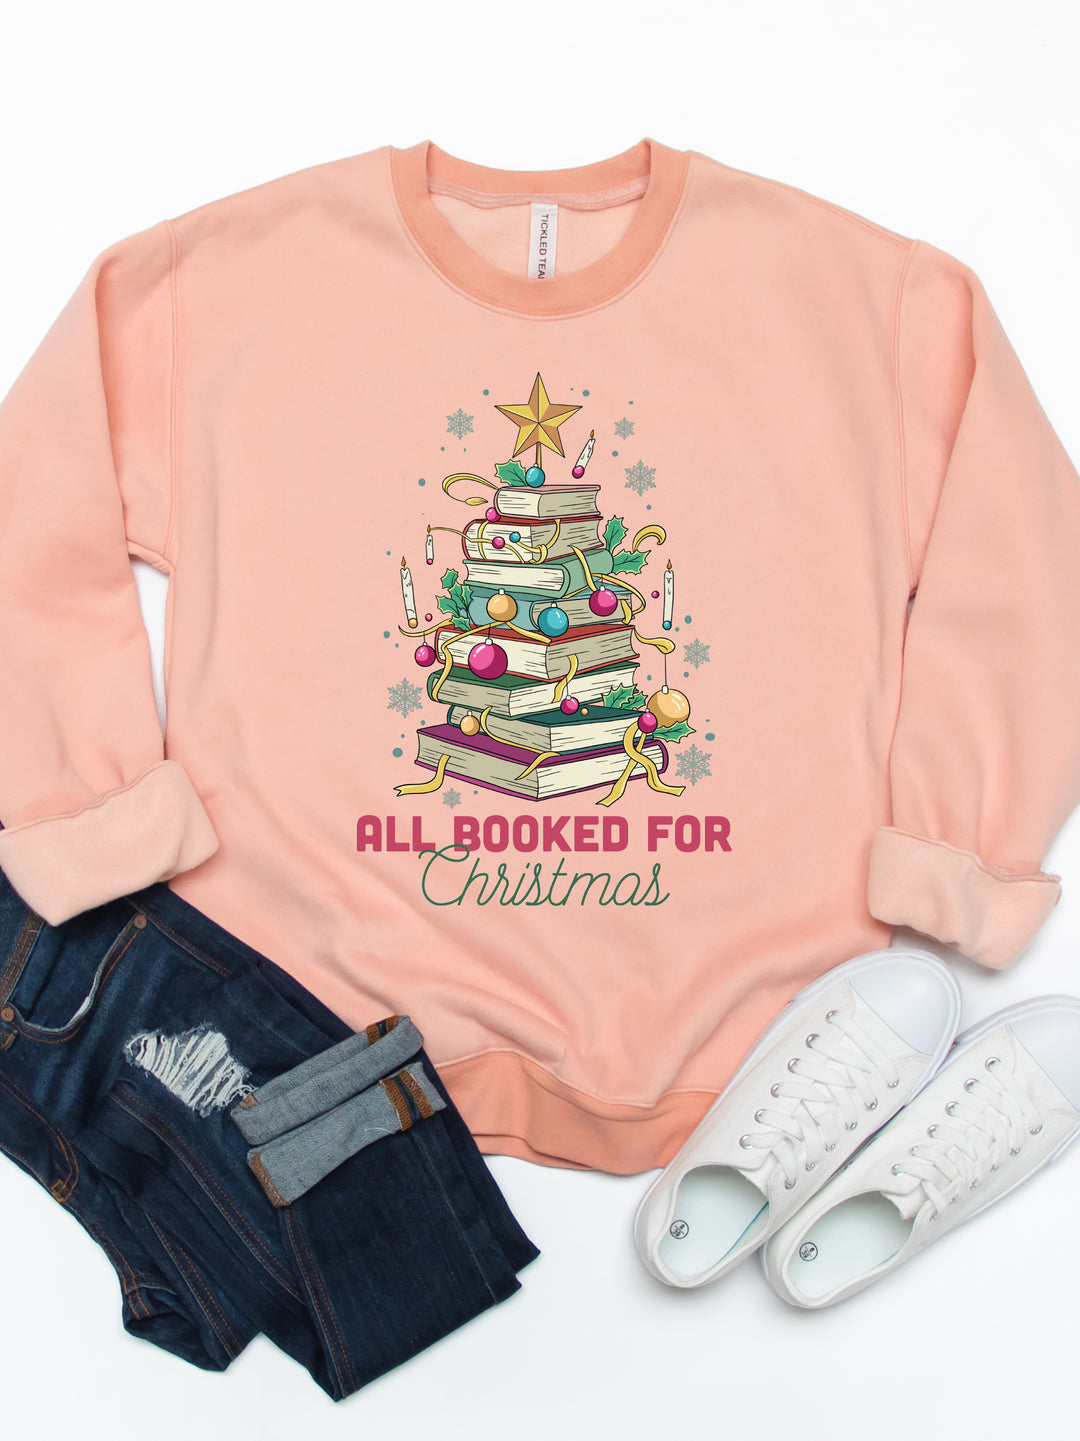 All Booked For Christmas - Christmas Graphic Sweatshirt